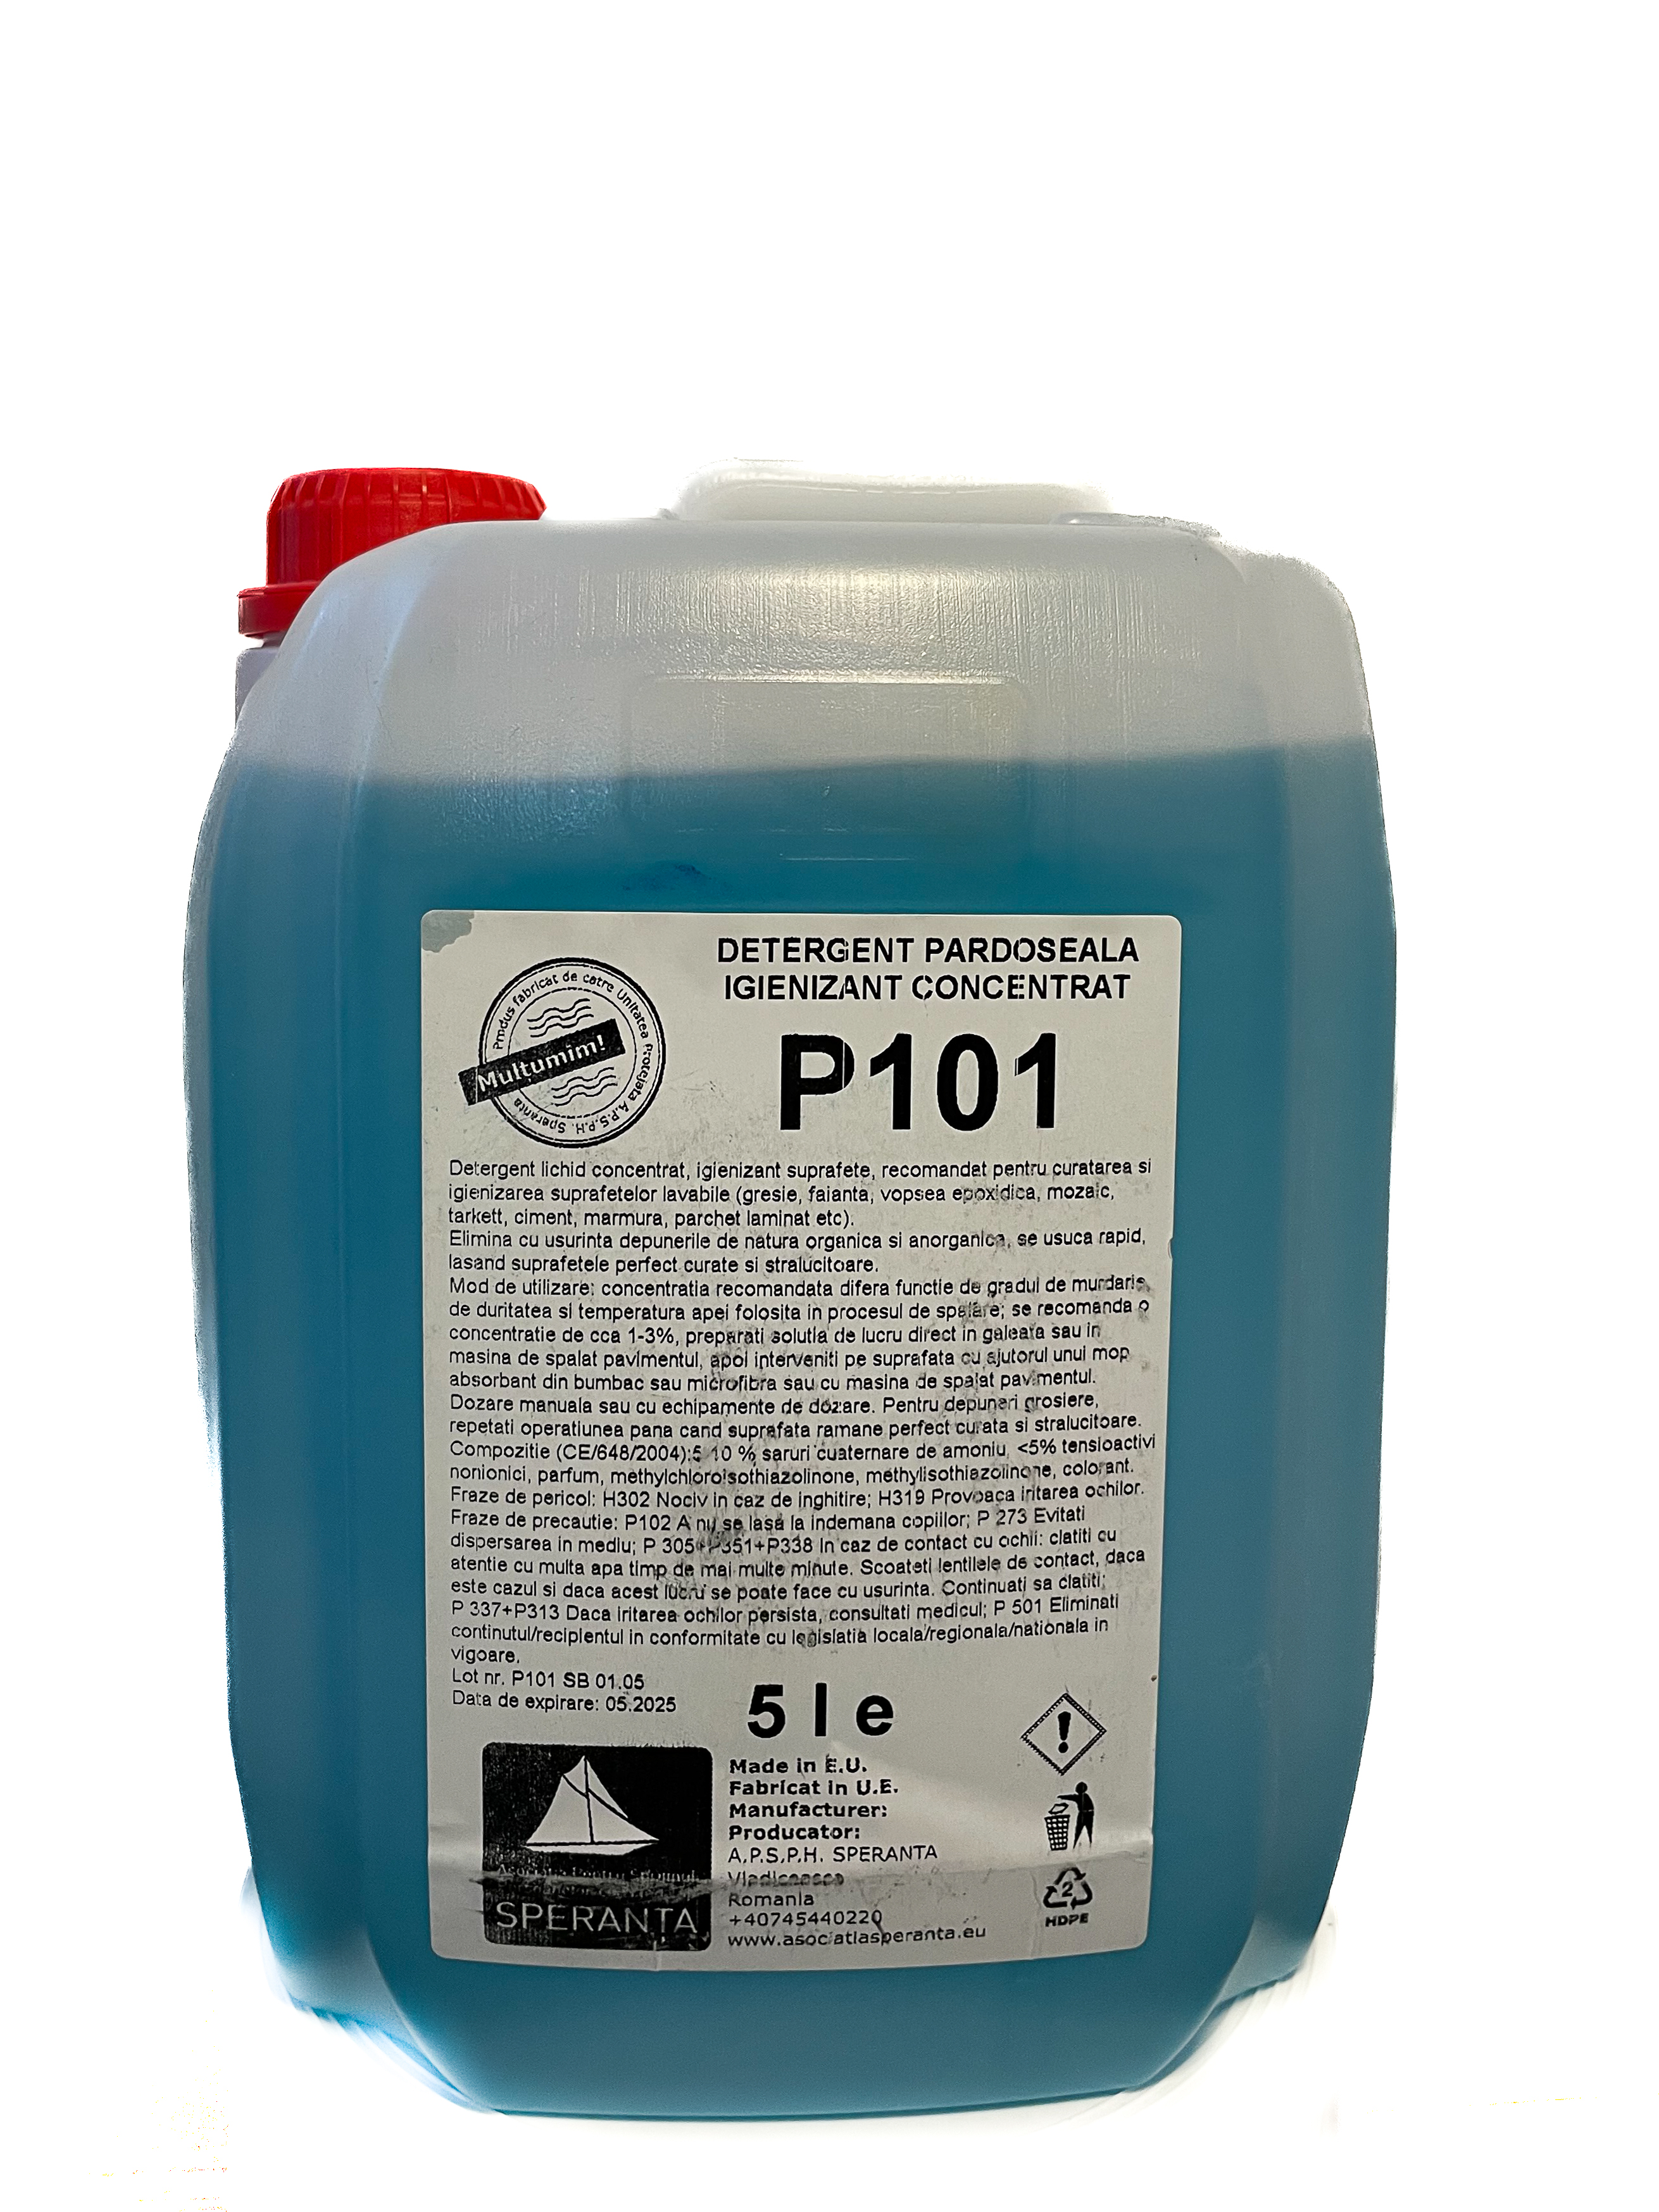 Detergent pardoseala igienizant Super Concentrat P101 Blue Sea 5000ml [5 LITRI]